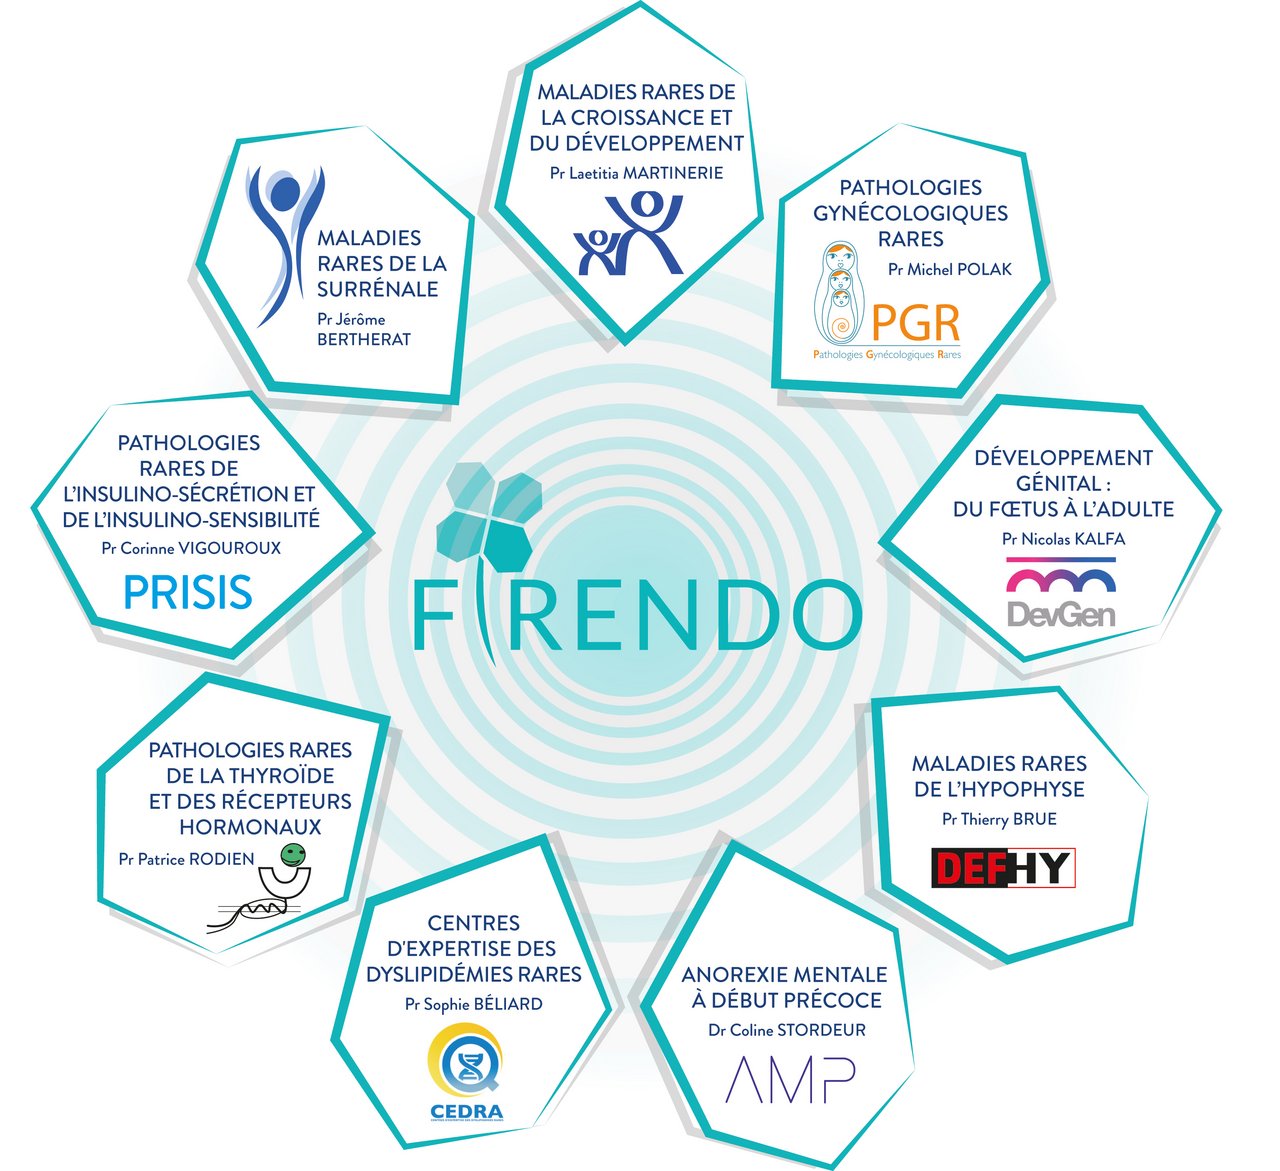 Visuel représentant les 9 catégories des maladies rares endocriniennes au sein de FIRENDO